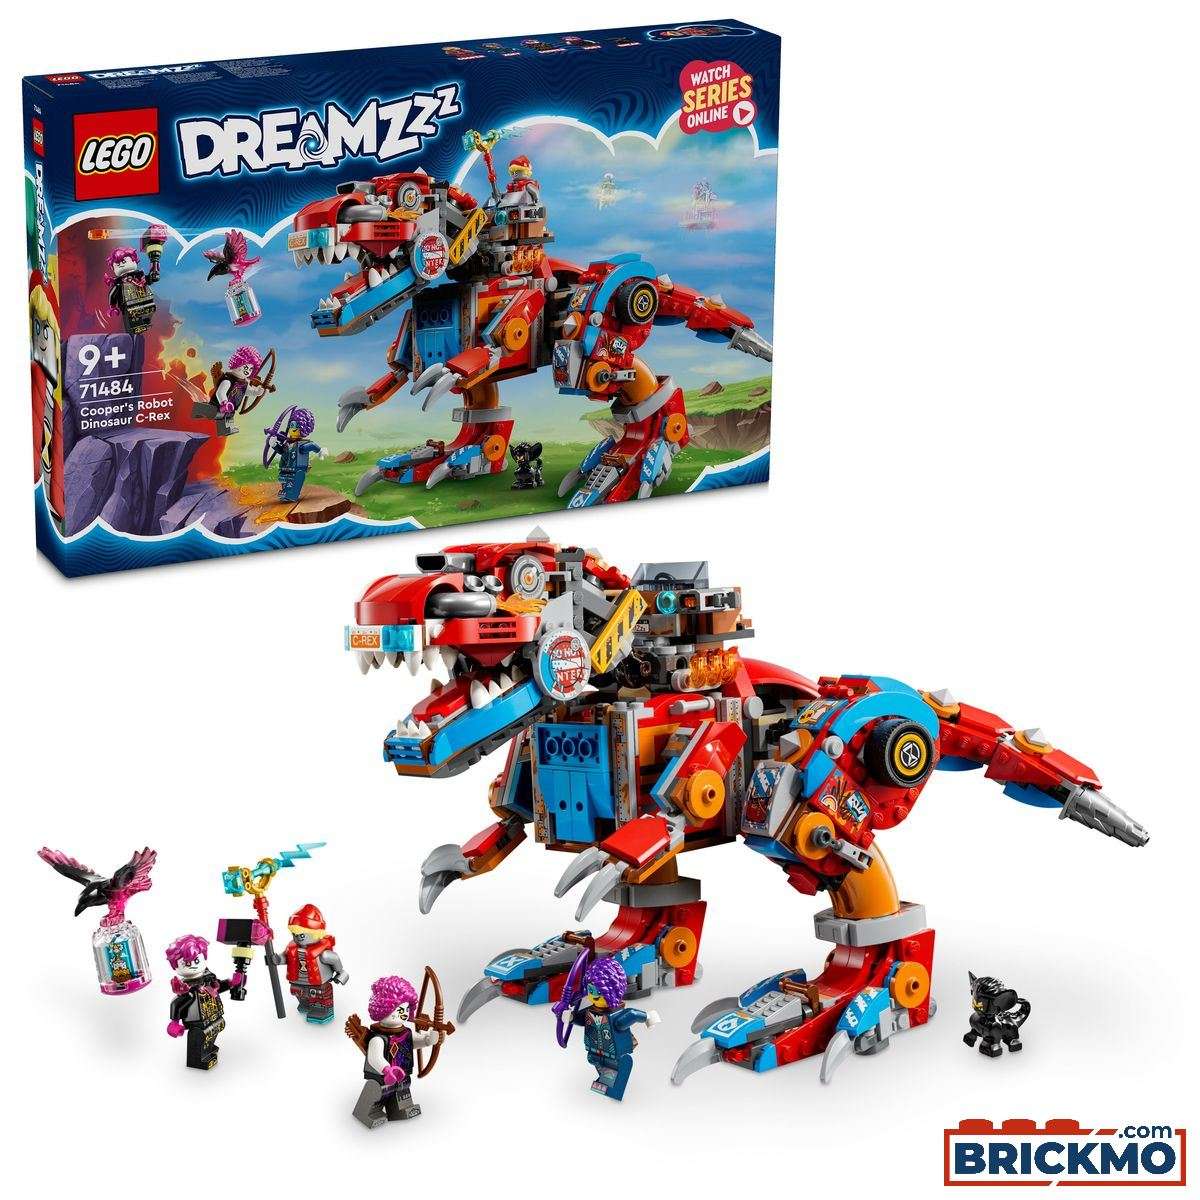 LEGO DreamZzz 71484 Dinosauro robot C-Rex di Cooper 71484